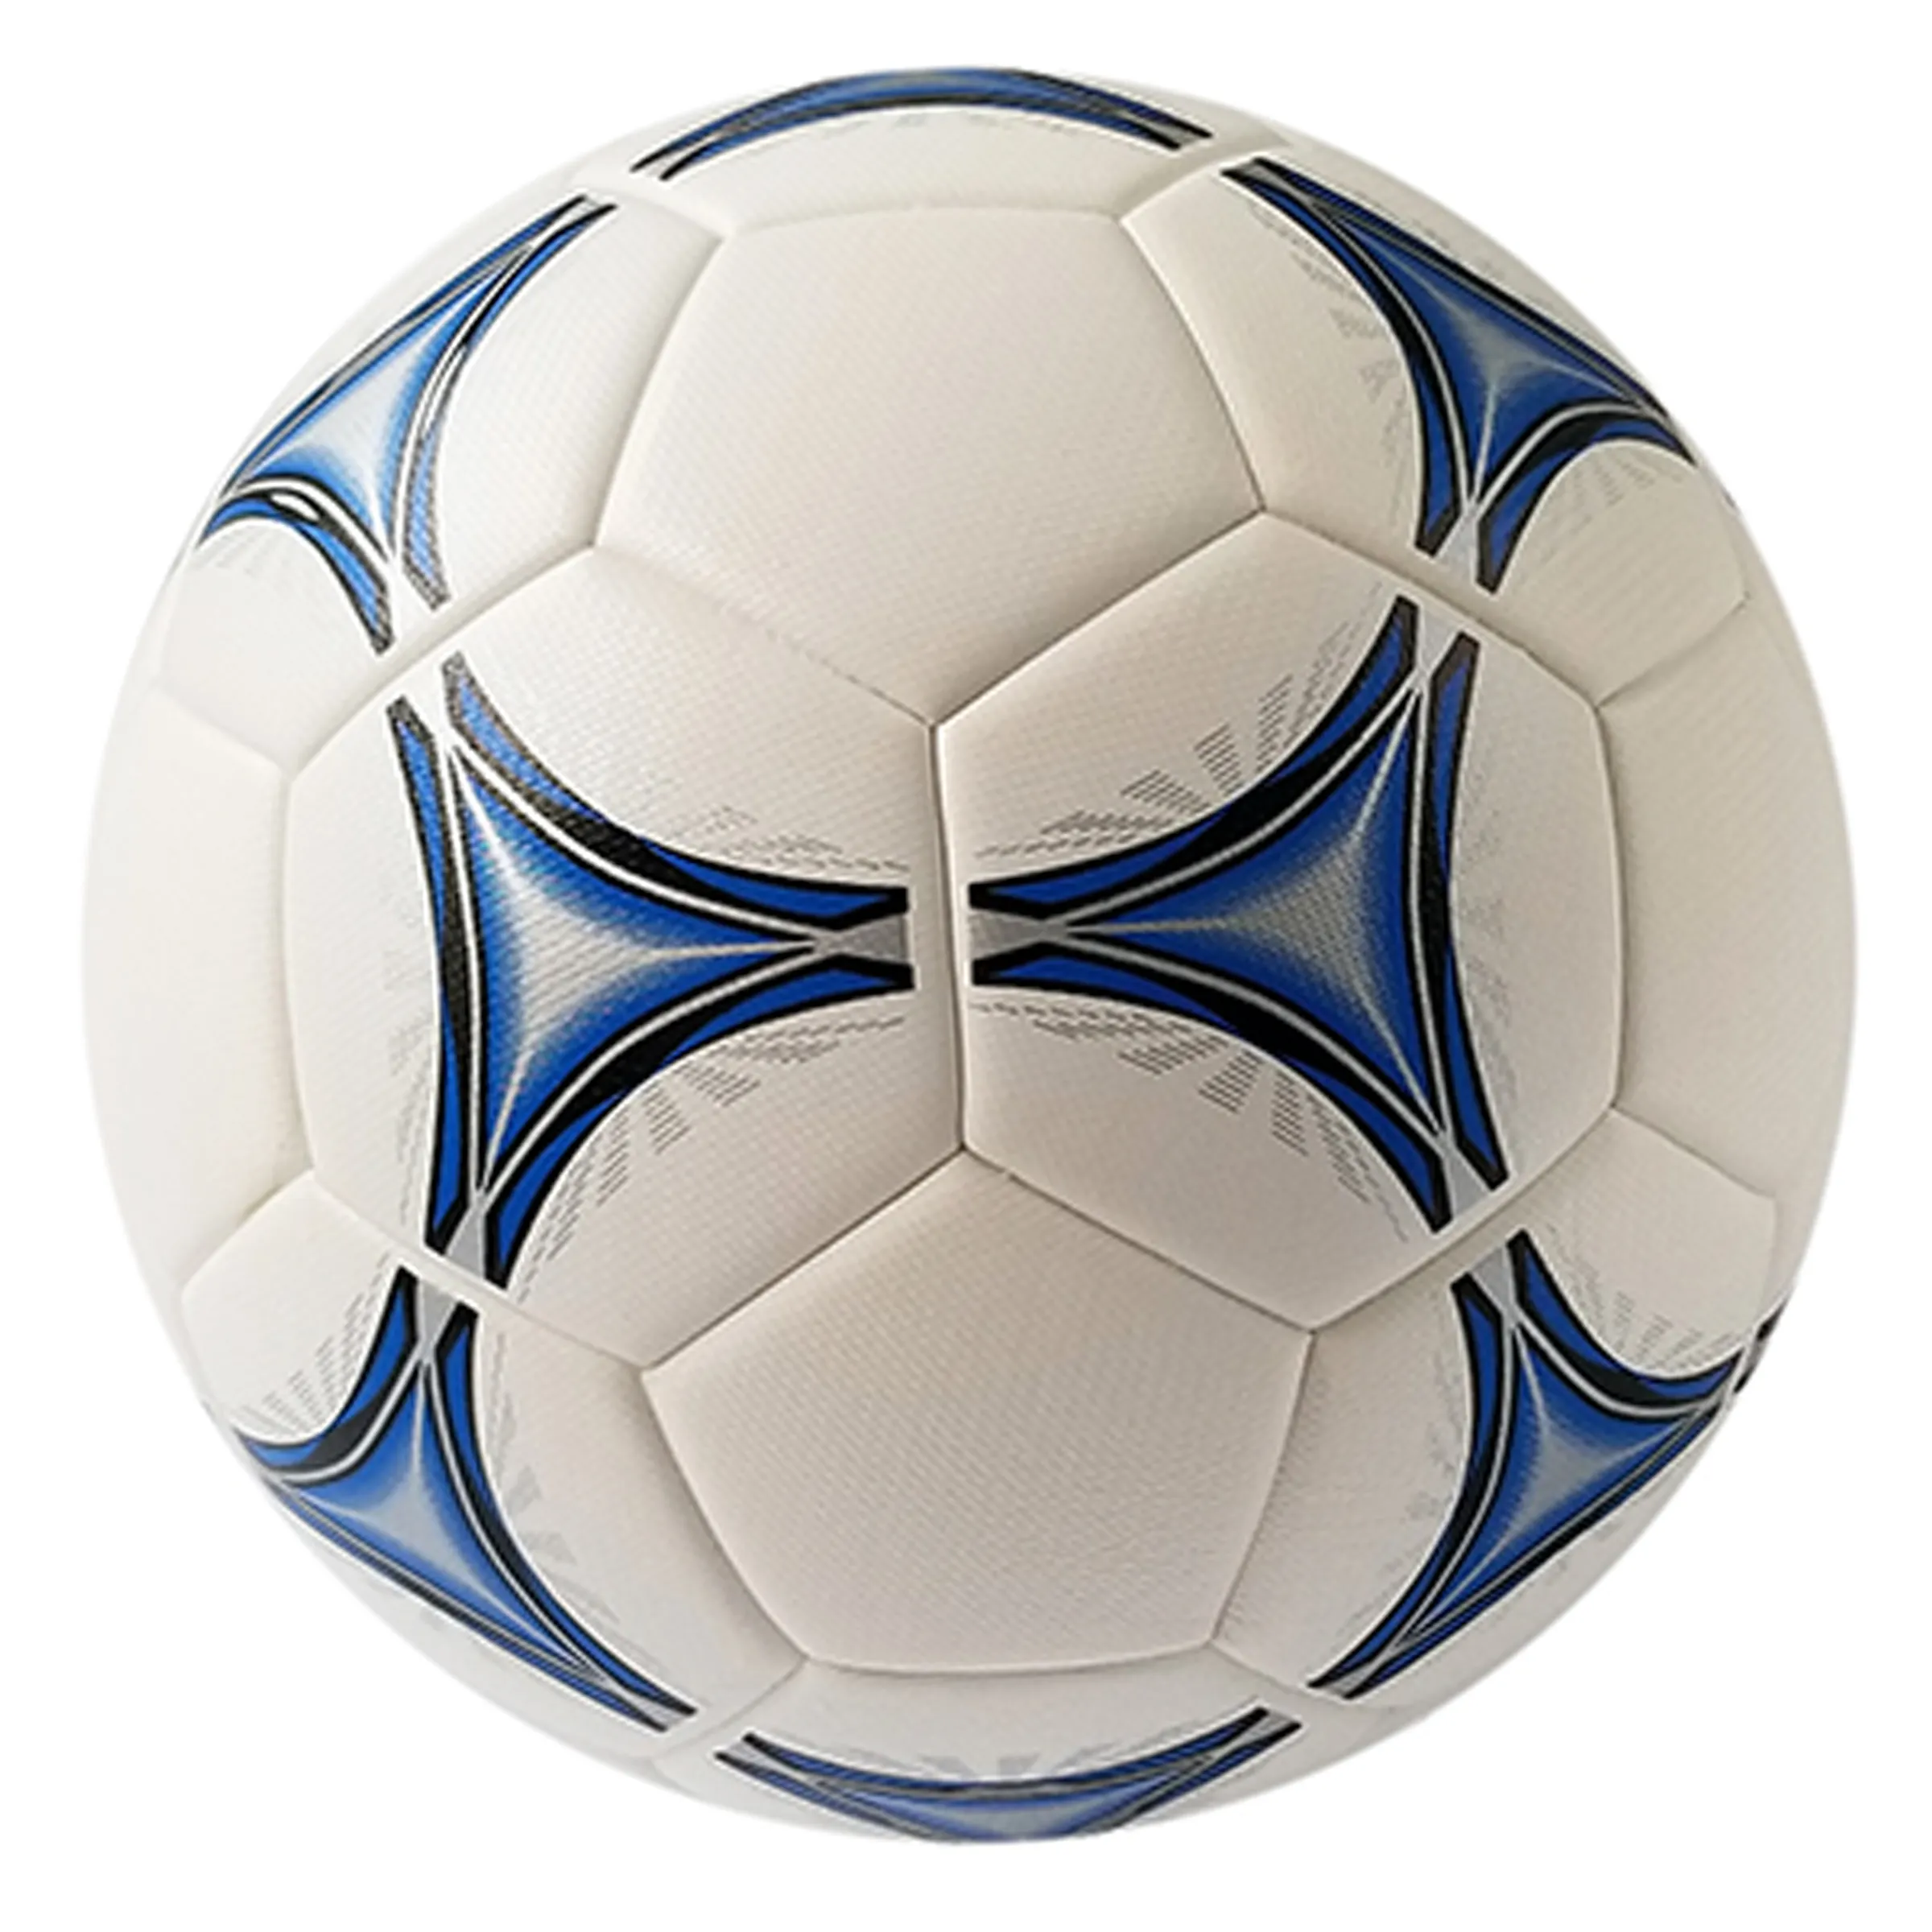 Balón de fútbol de alta calidad, diseño de impresión de logotipo personalizado, balón de fútbol de cuero PU, tamaño 5, pegado térmico para deportes